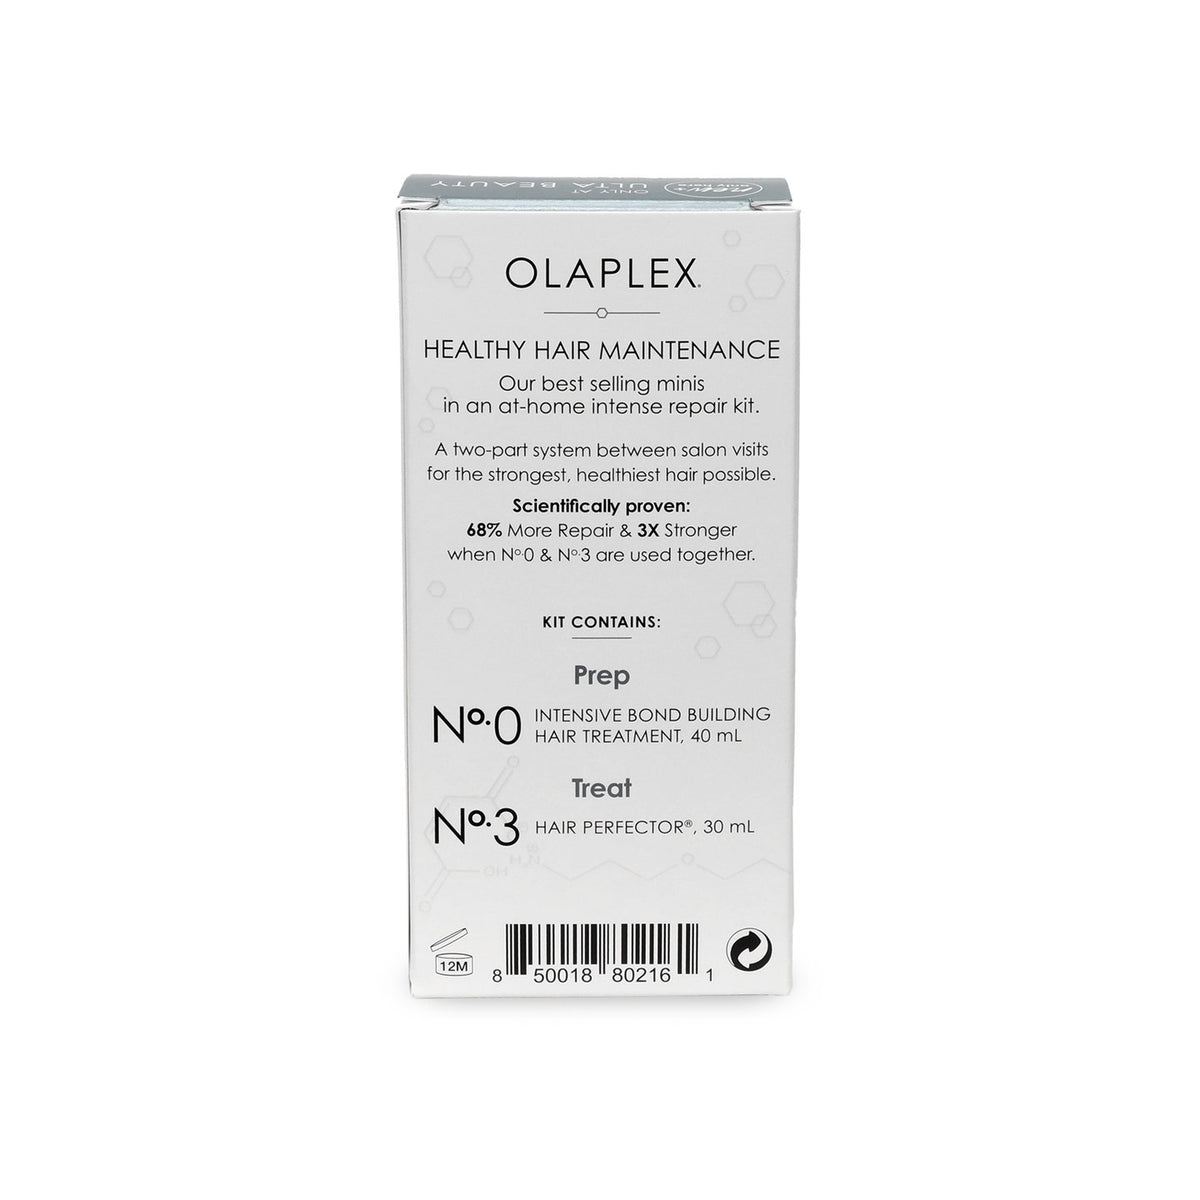 Olaplex - Healthy Hair Maintenance Kit |1.35 oz| - ProCare Outlet by Olaplex